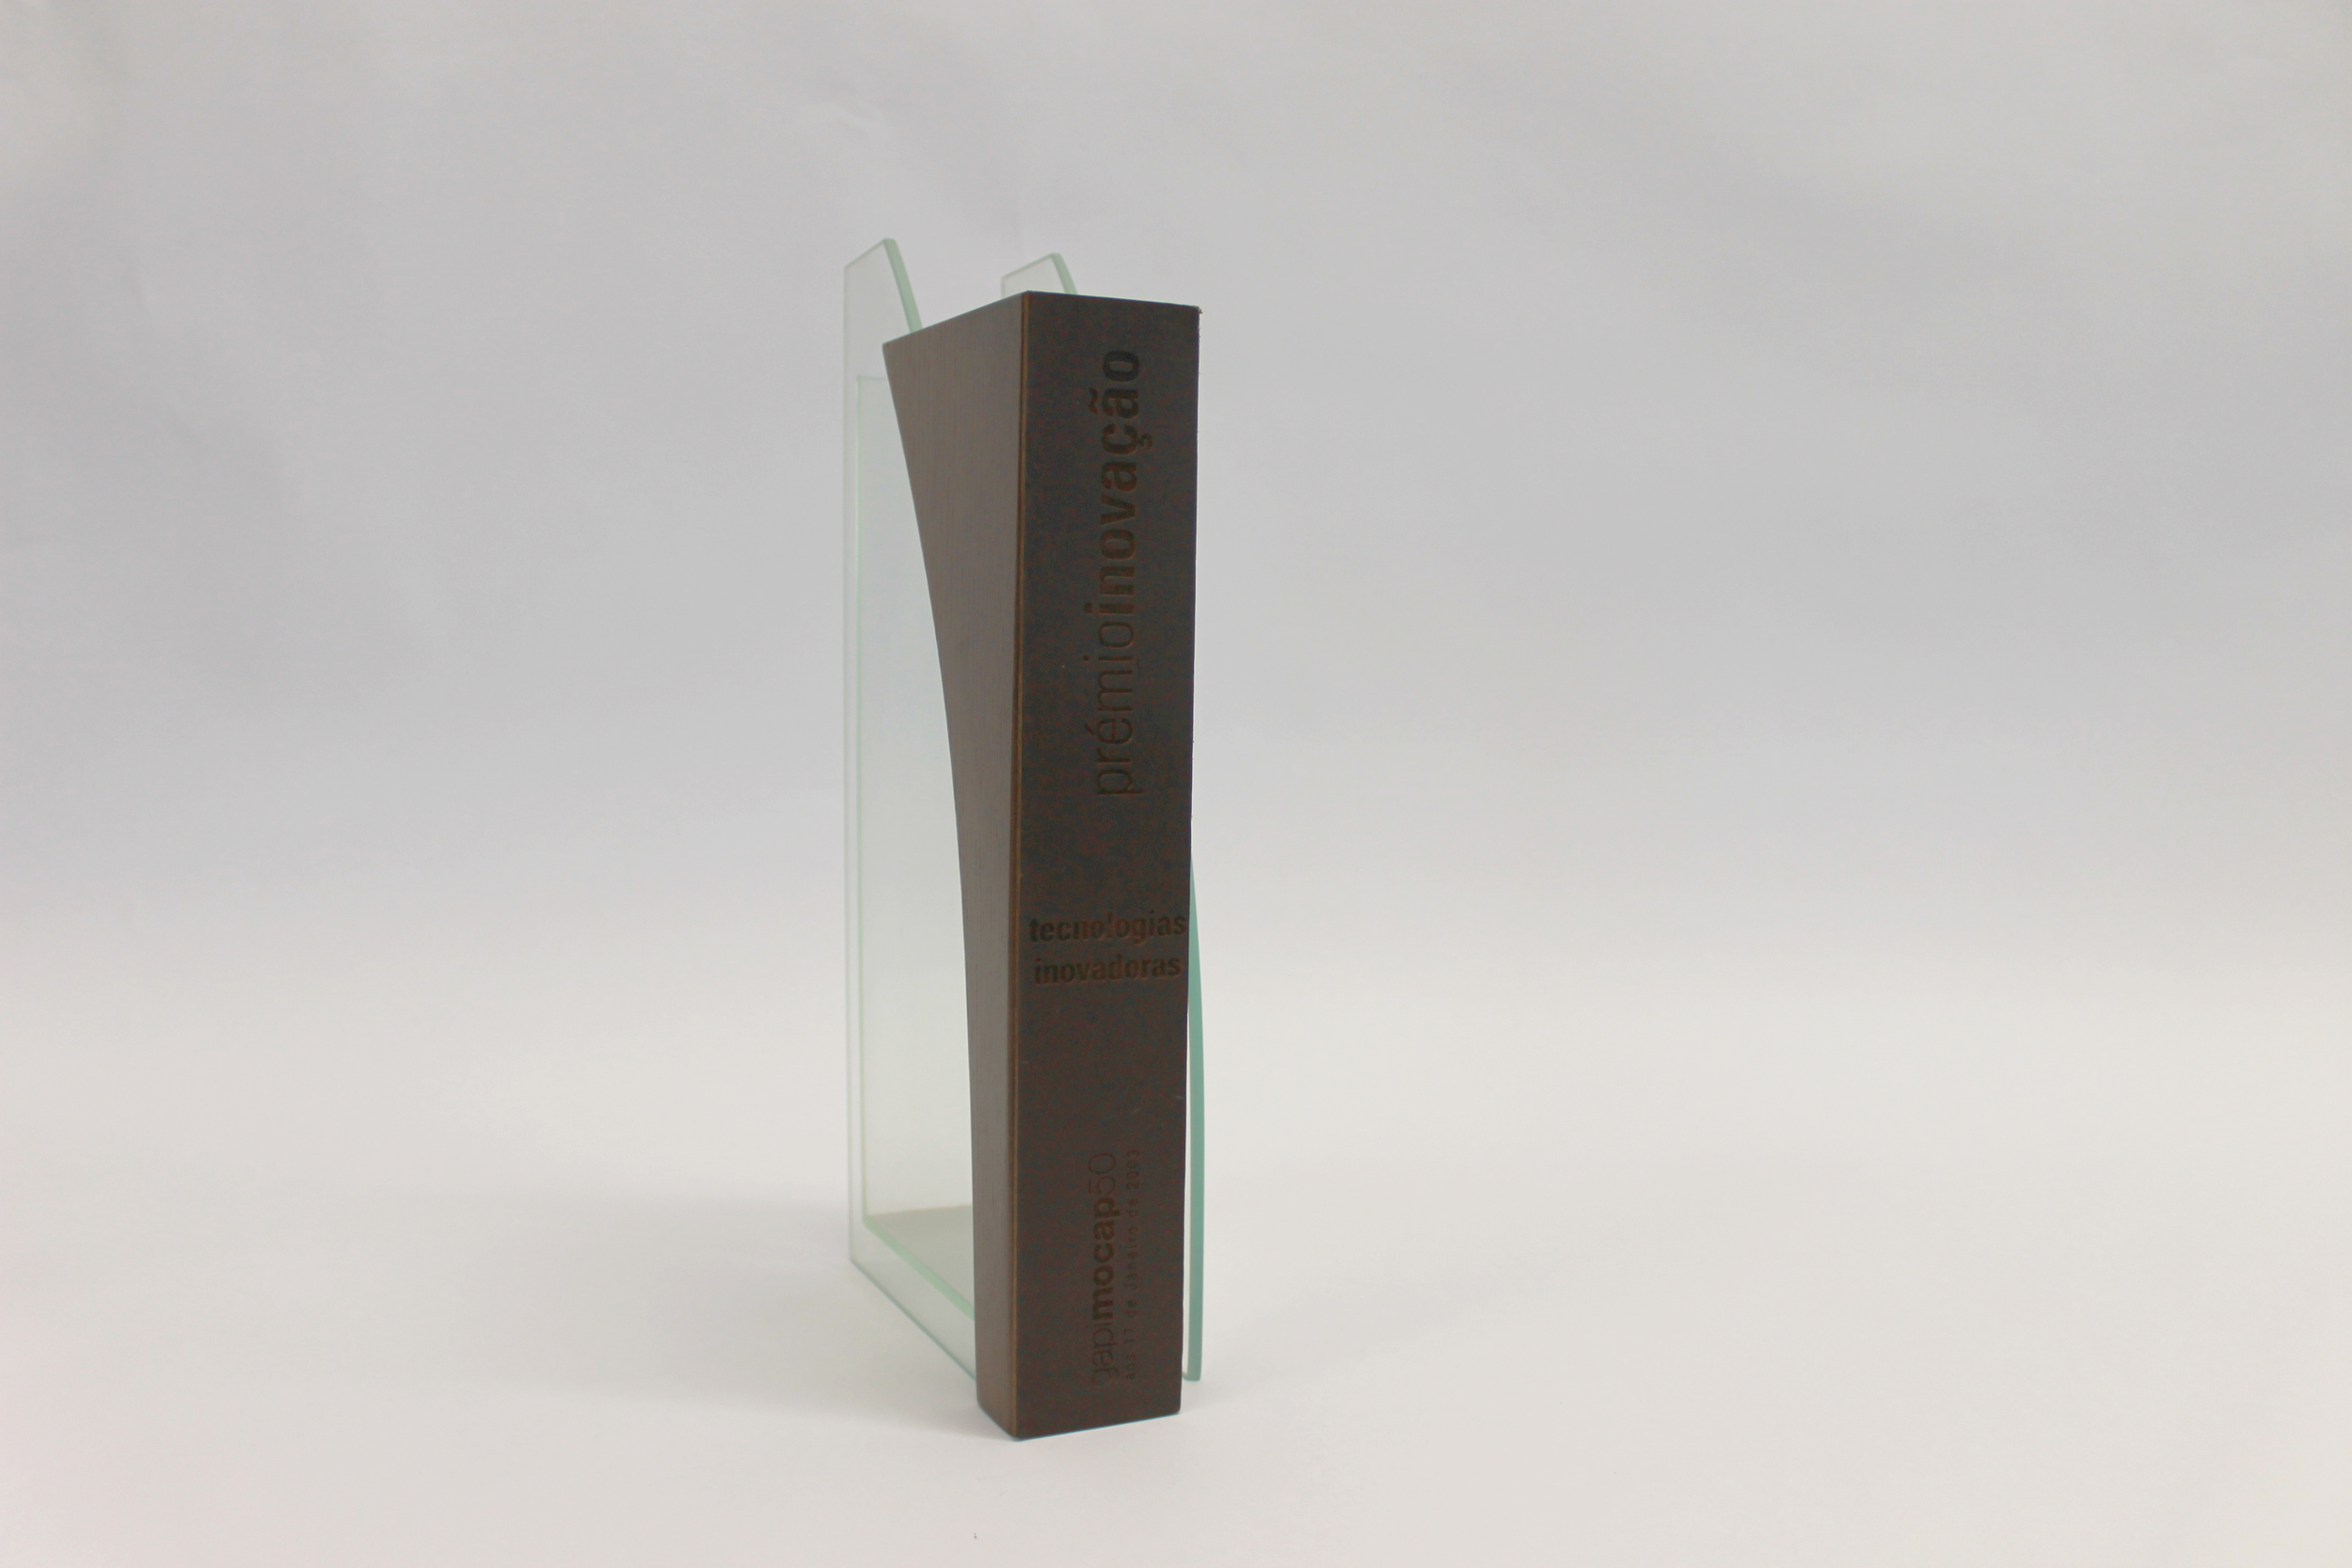 2003 - Technological Innovation Award (Gapimocap50)